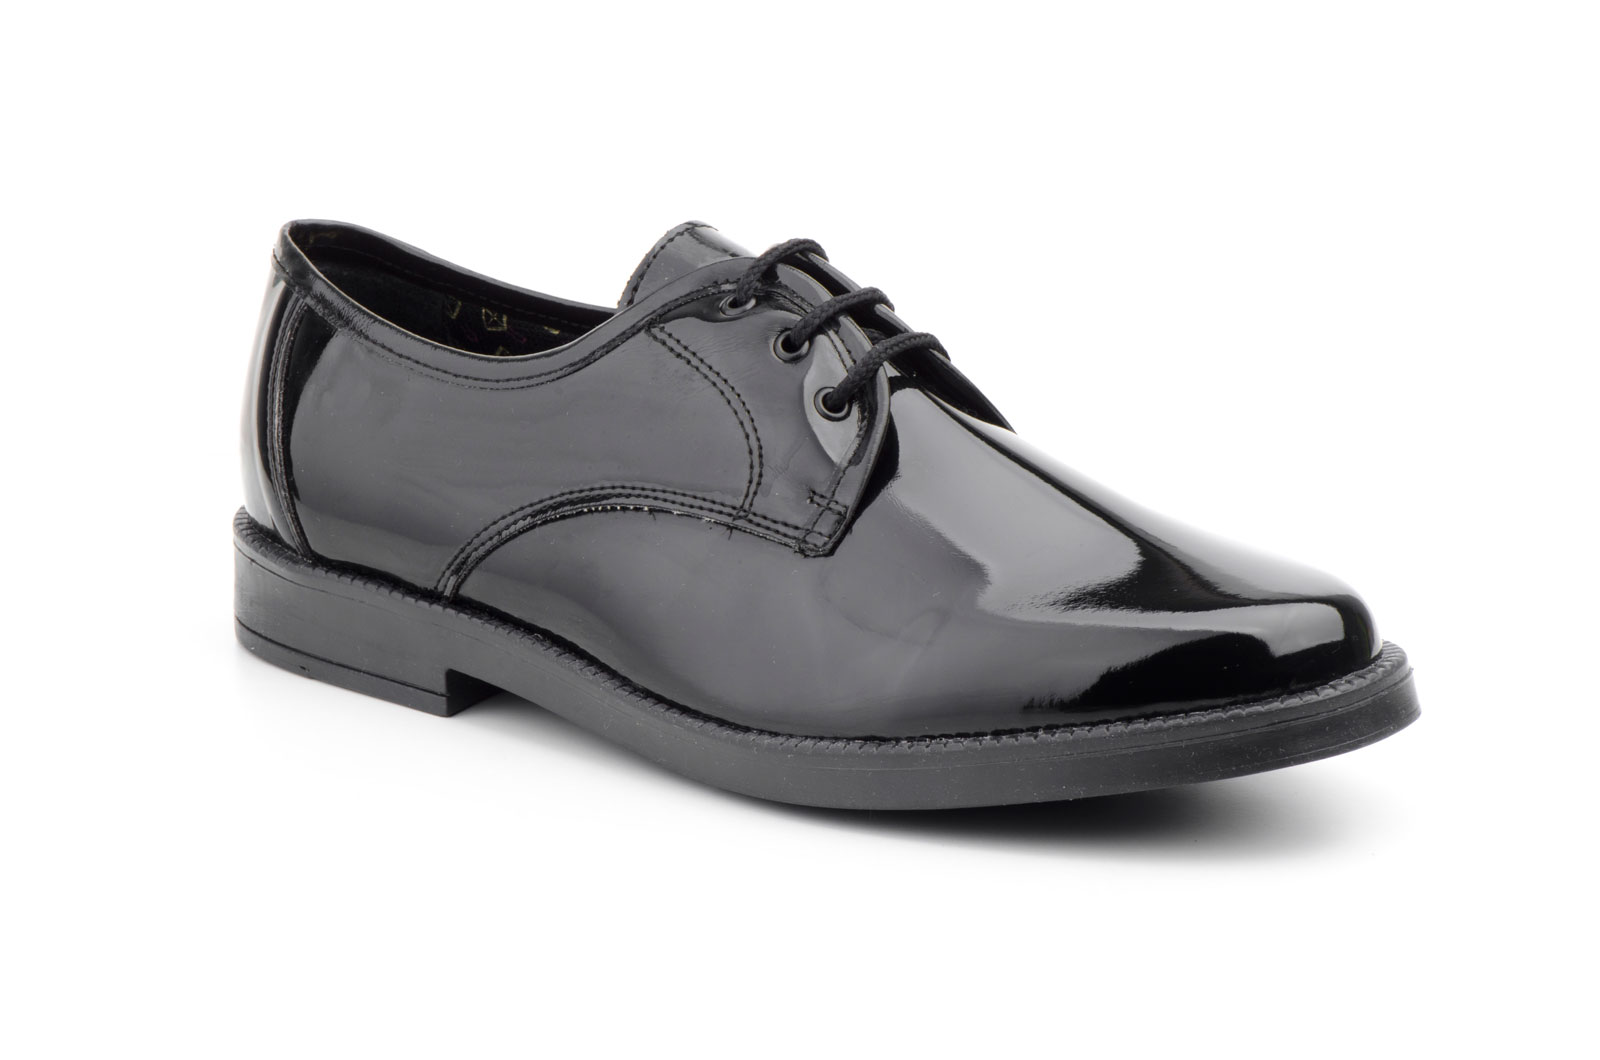 Zapatos Hombre Charol Negro Cordones  -  Ref. 120 Charol Negro